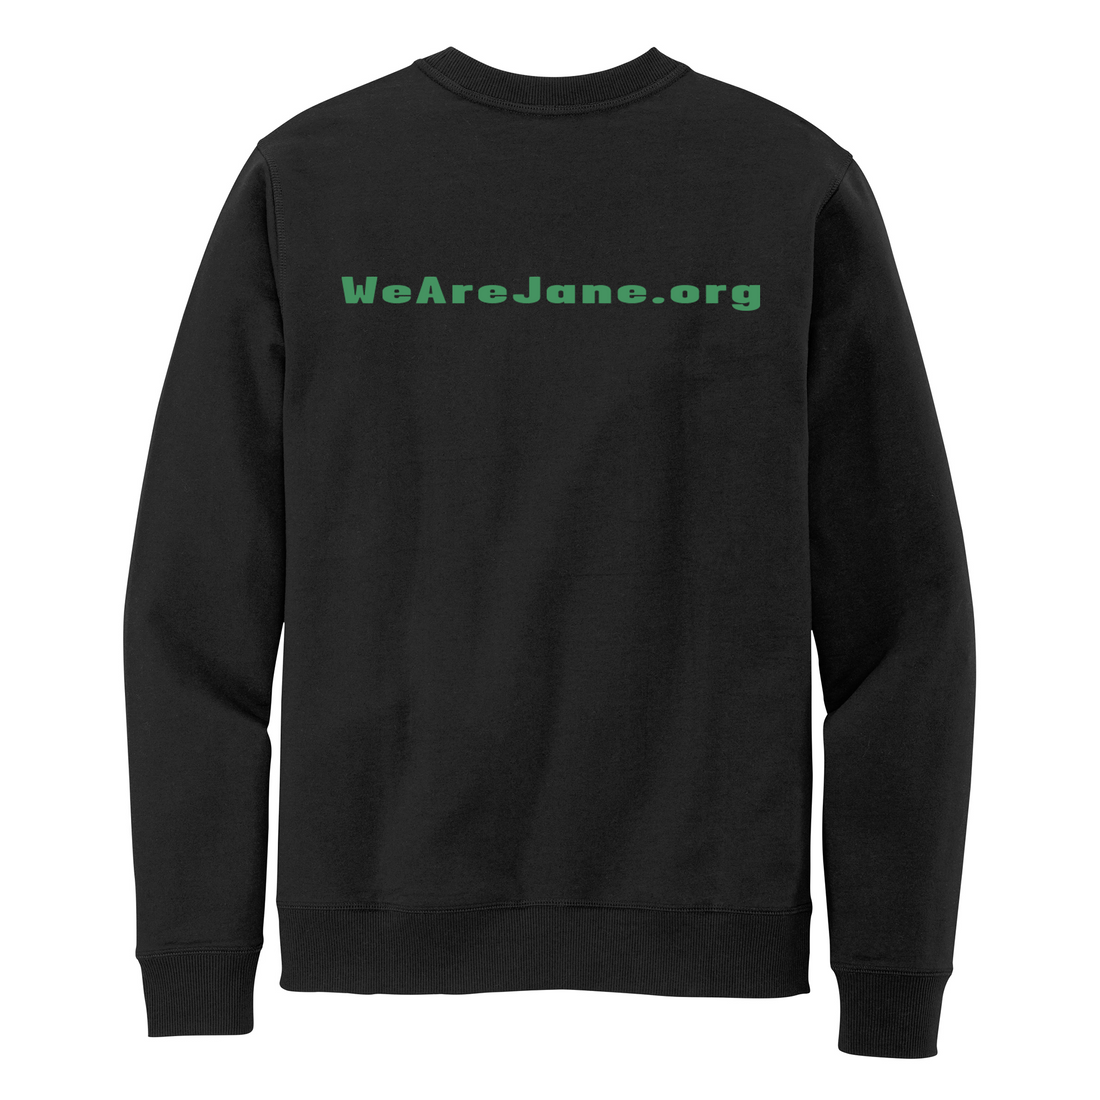 Unisex JANE Crewneck Sweatshirt in Black with Green Letters